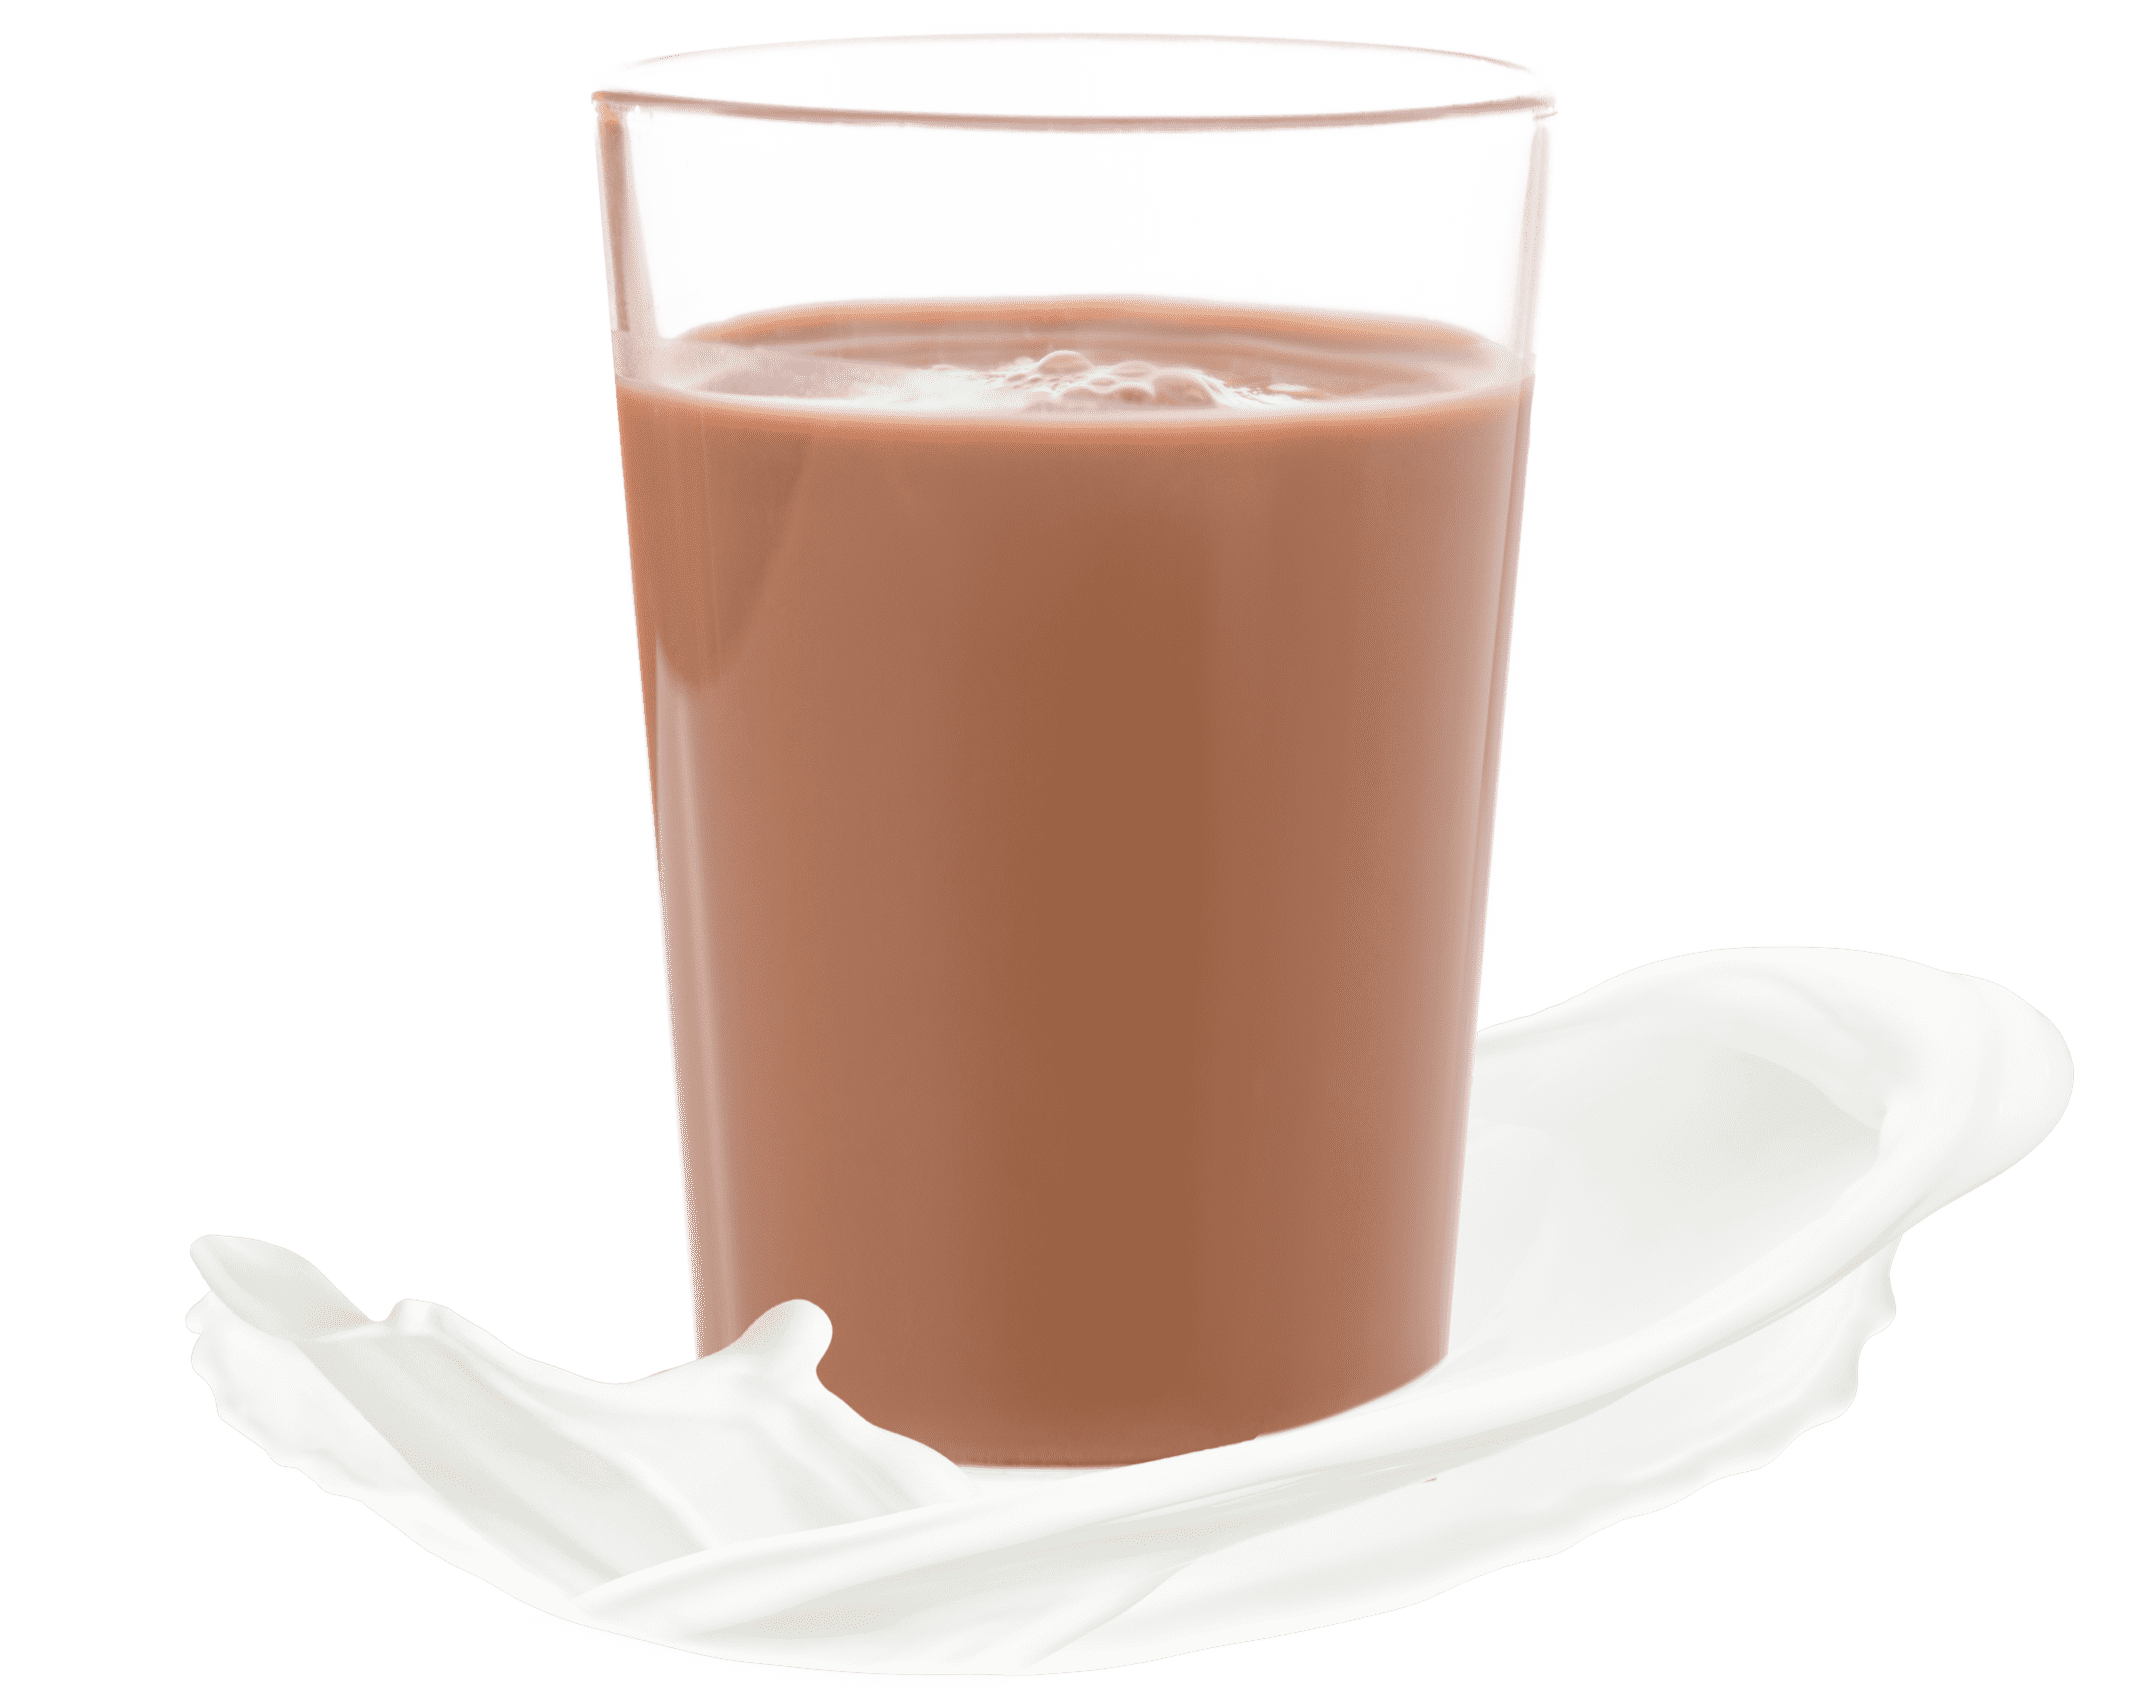 Glass of chocolate milk